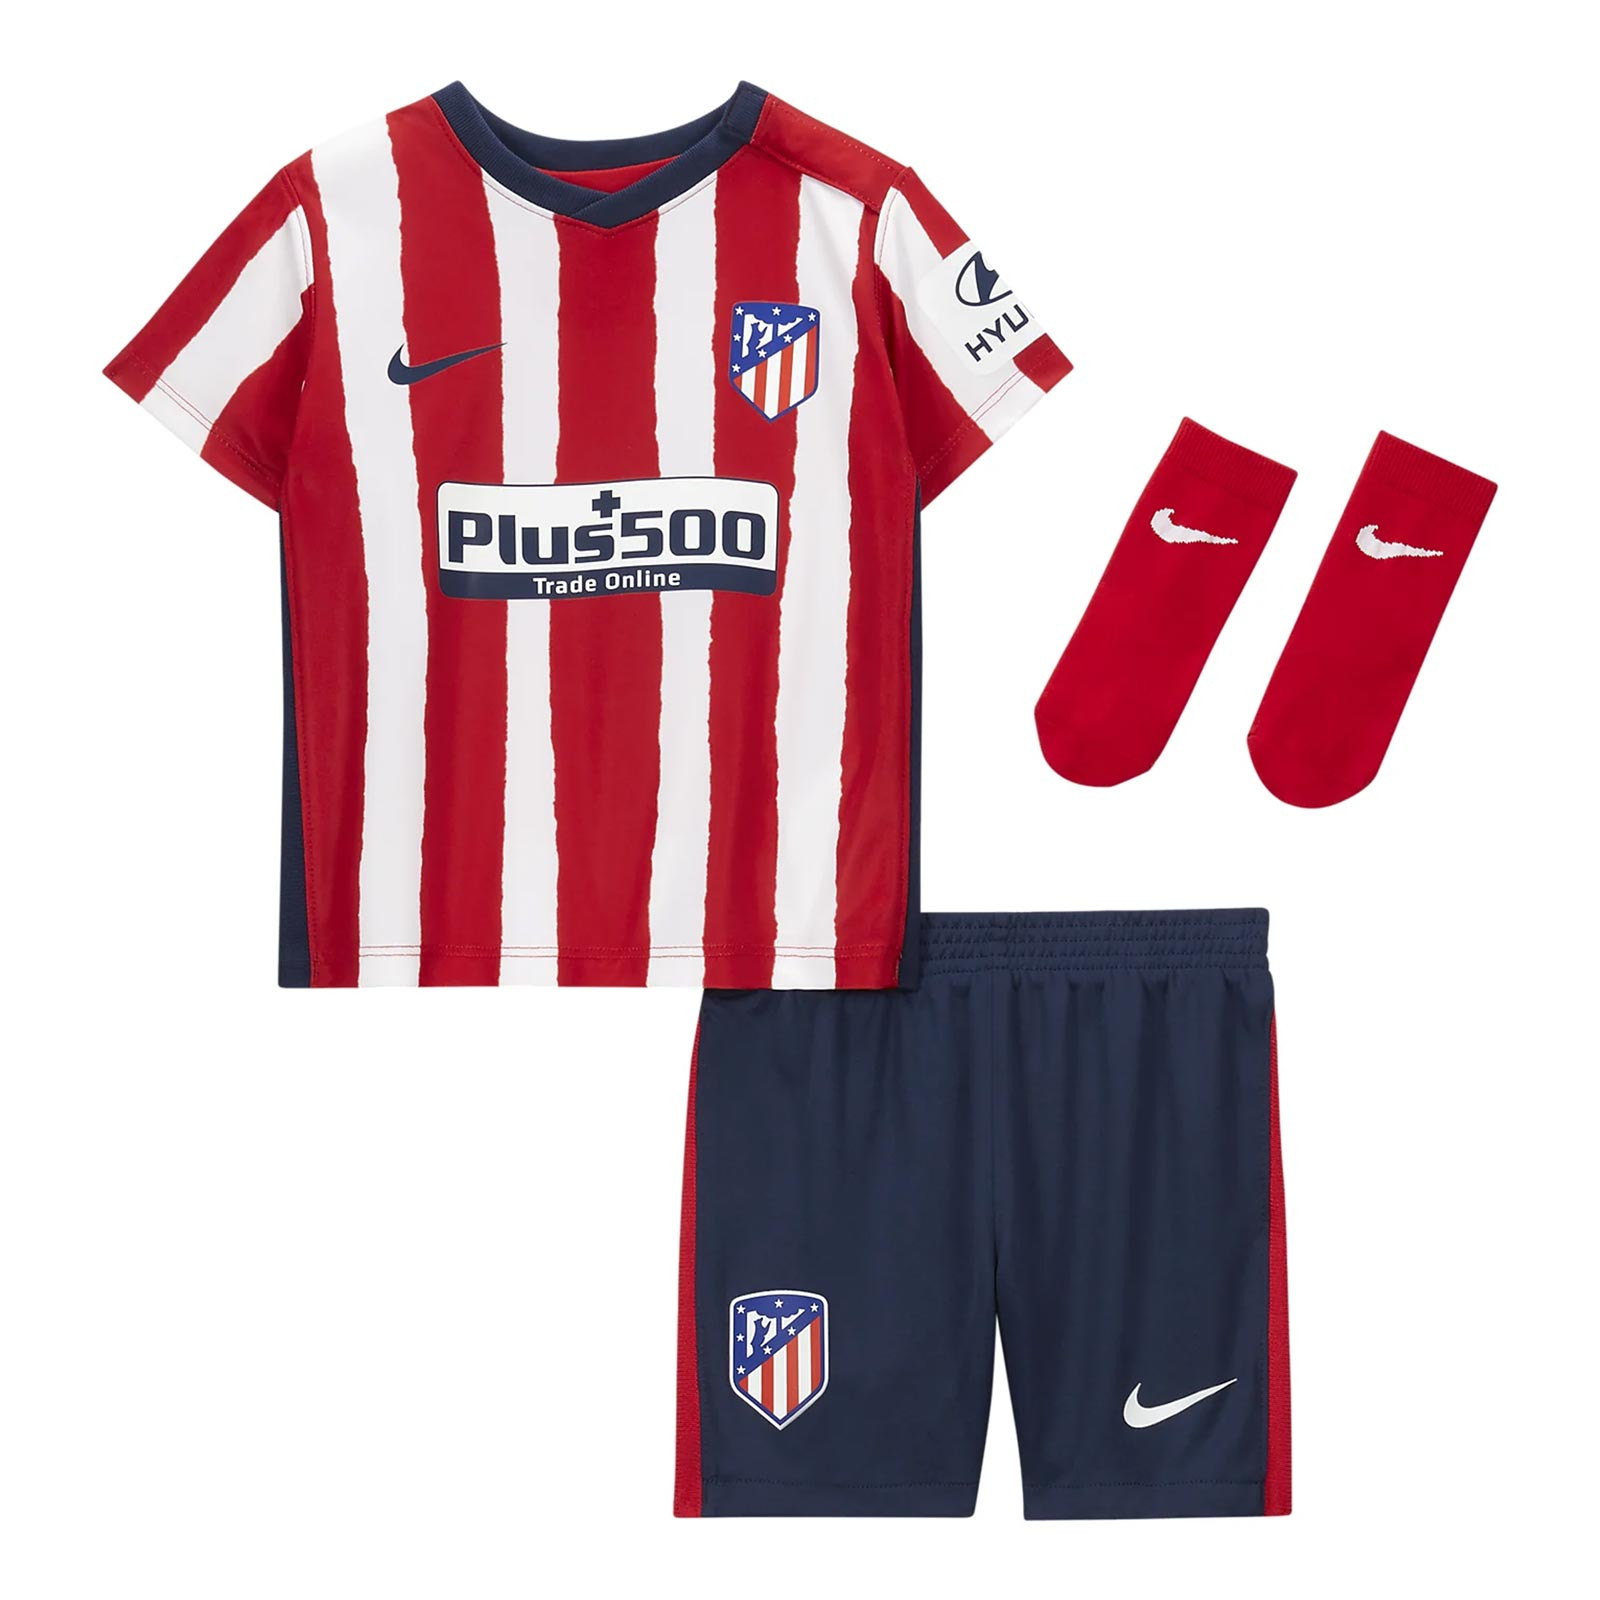 Kit Nike Atlético bebé 3 36 meses 2021 | futbolmaniaKids